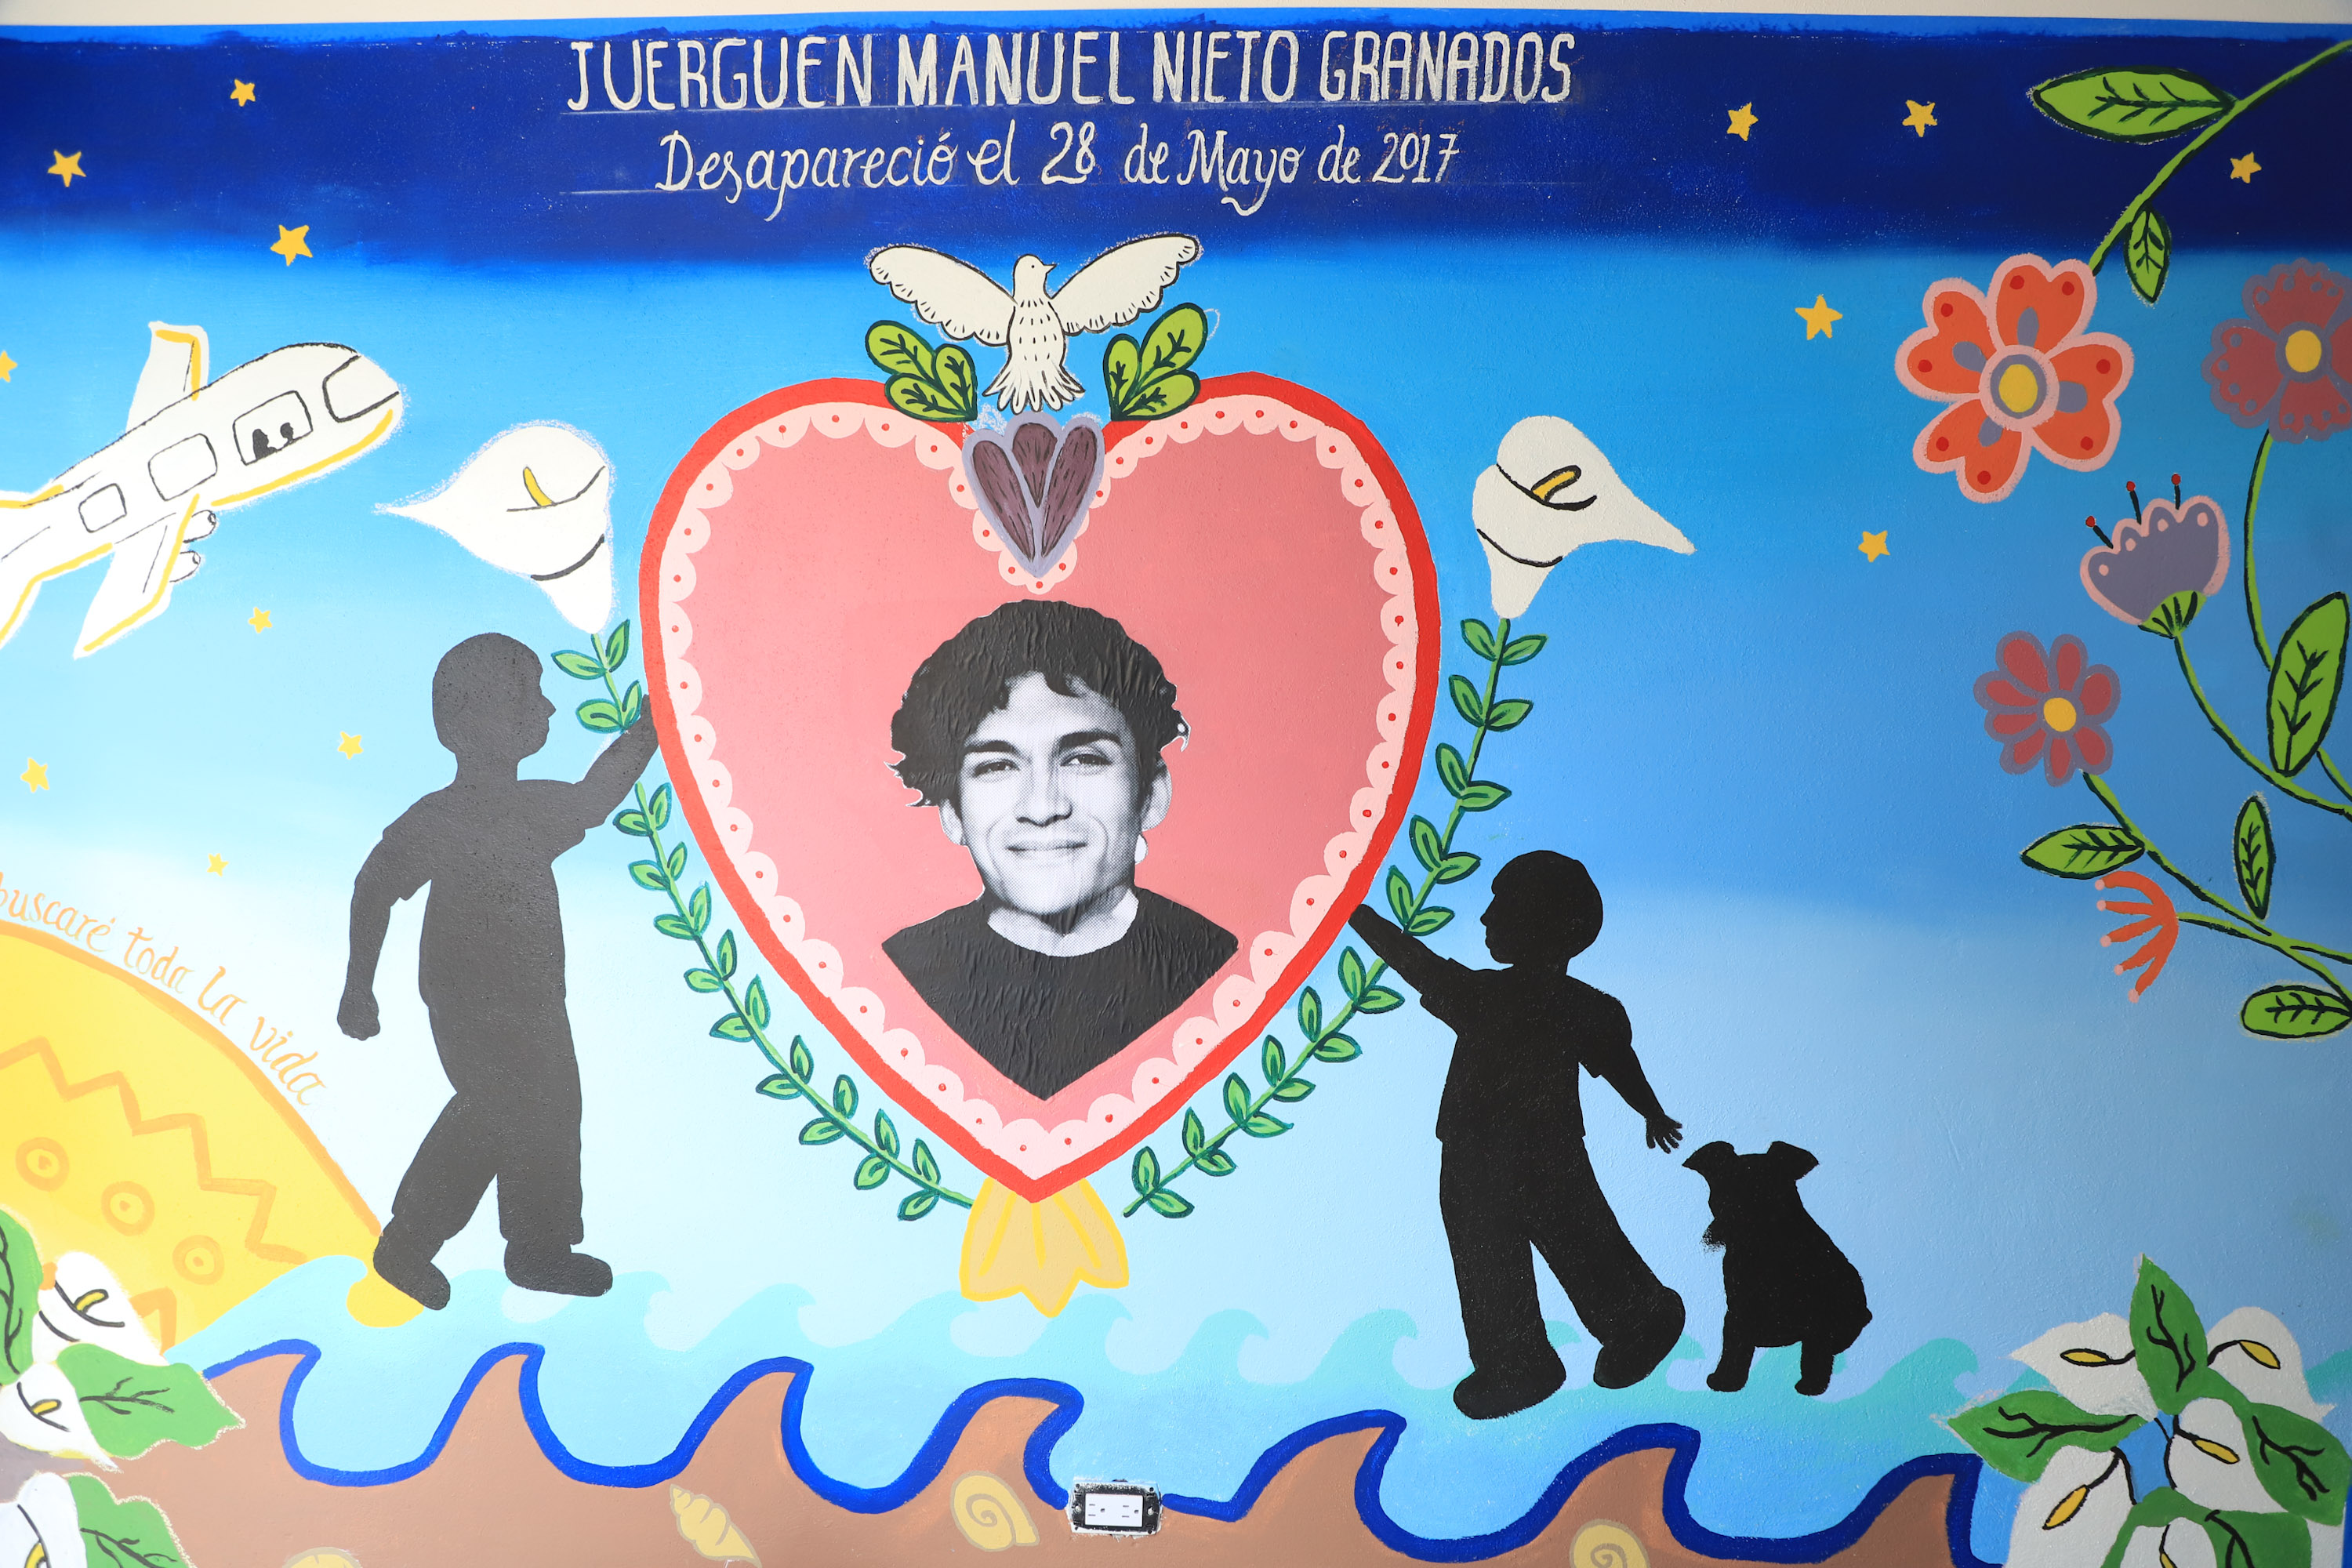 Plasman mural para recodar a Juerguen Manuel Nieto